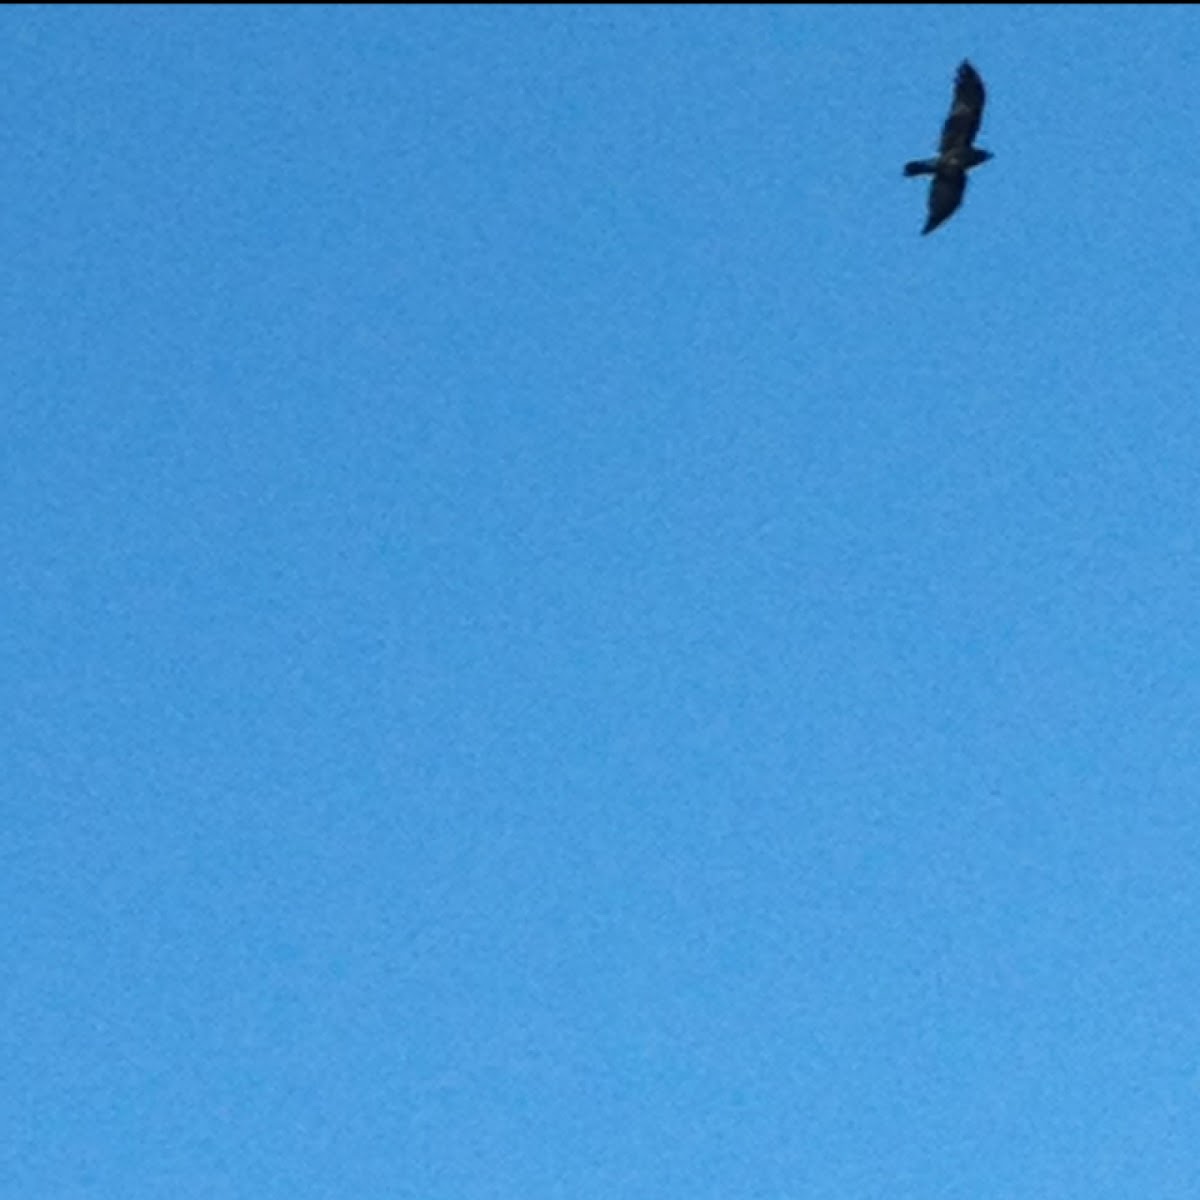 Red-tailed hawk, Dark morph Swainson's Hawk